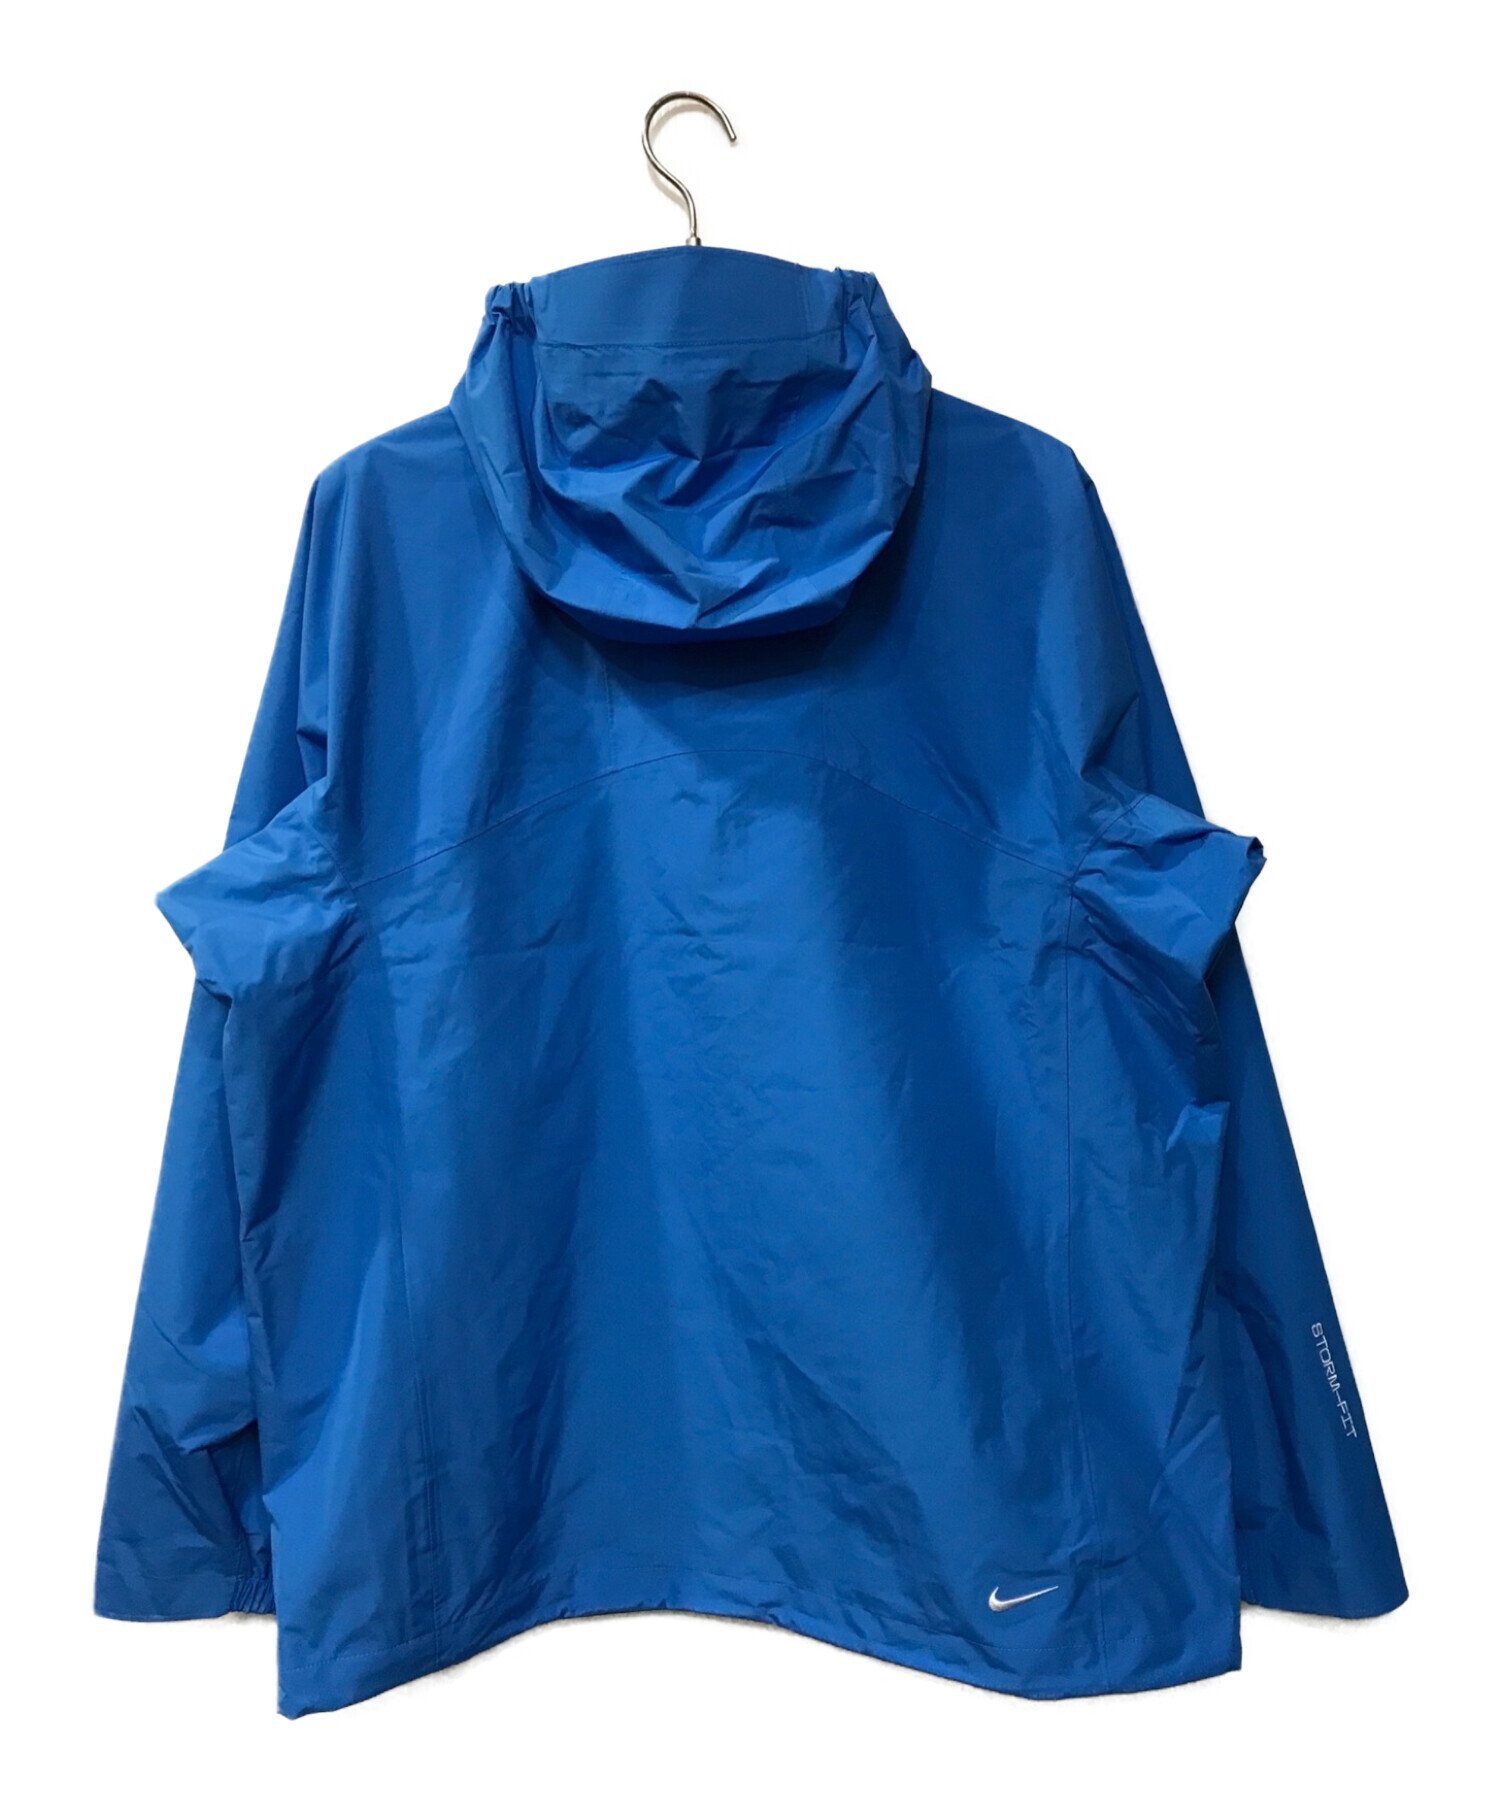 NIKE ACG (ナイキエージーシー) Sf Cascade Rain Hoodie Jacket ブルー サイズ:L